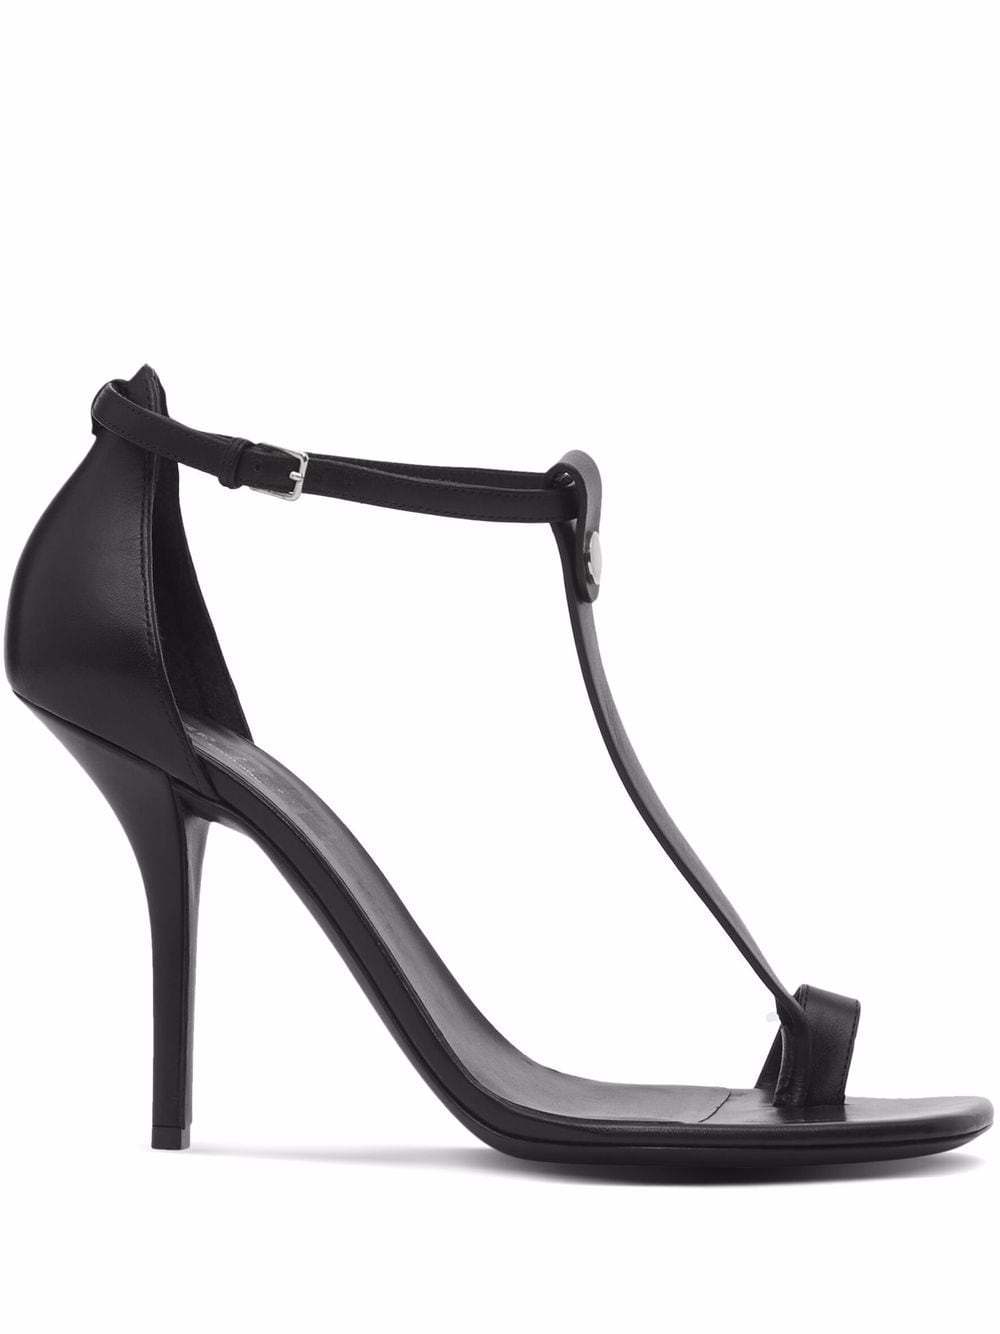 stiletto-heel leather sandals